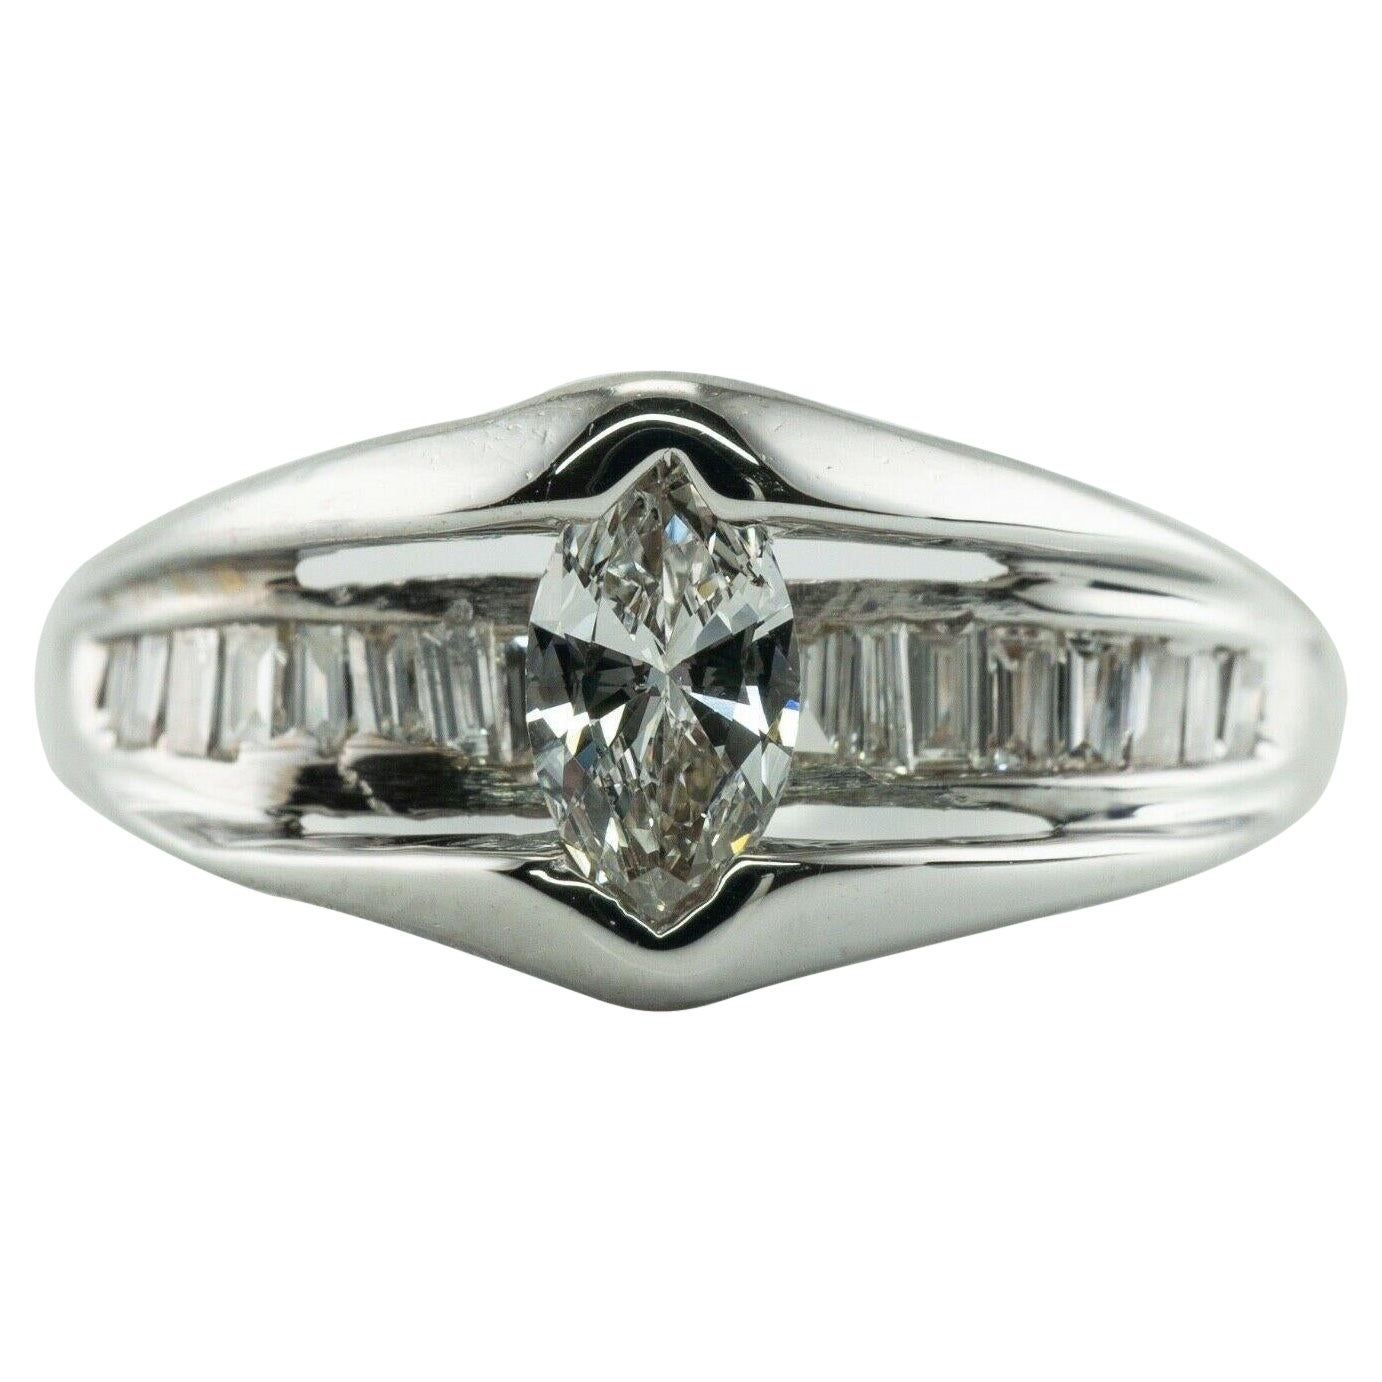 Diamond Ring 14K White Gold Band Marquise Cut Engagement